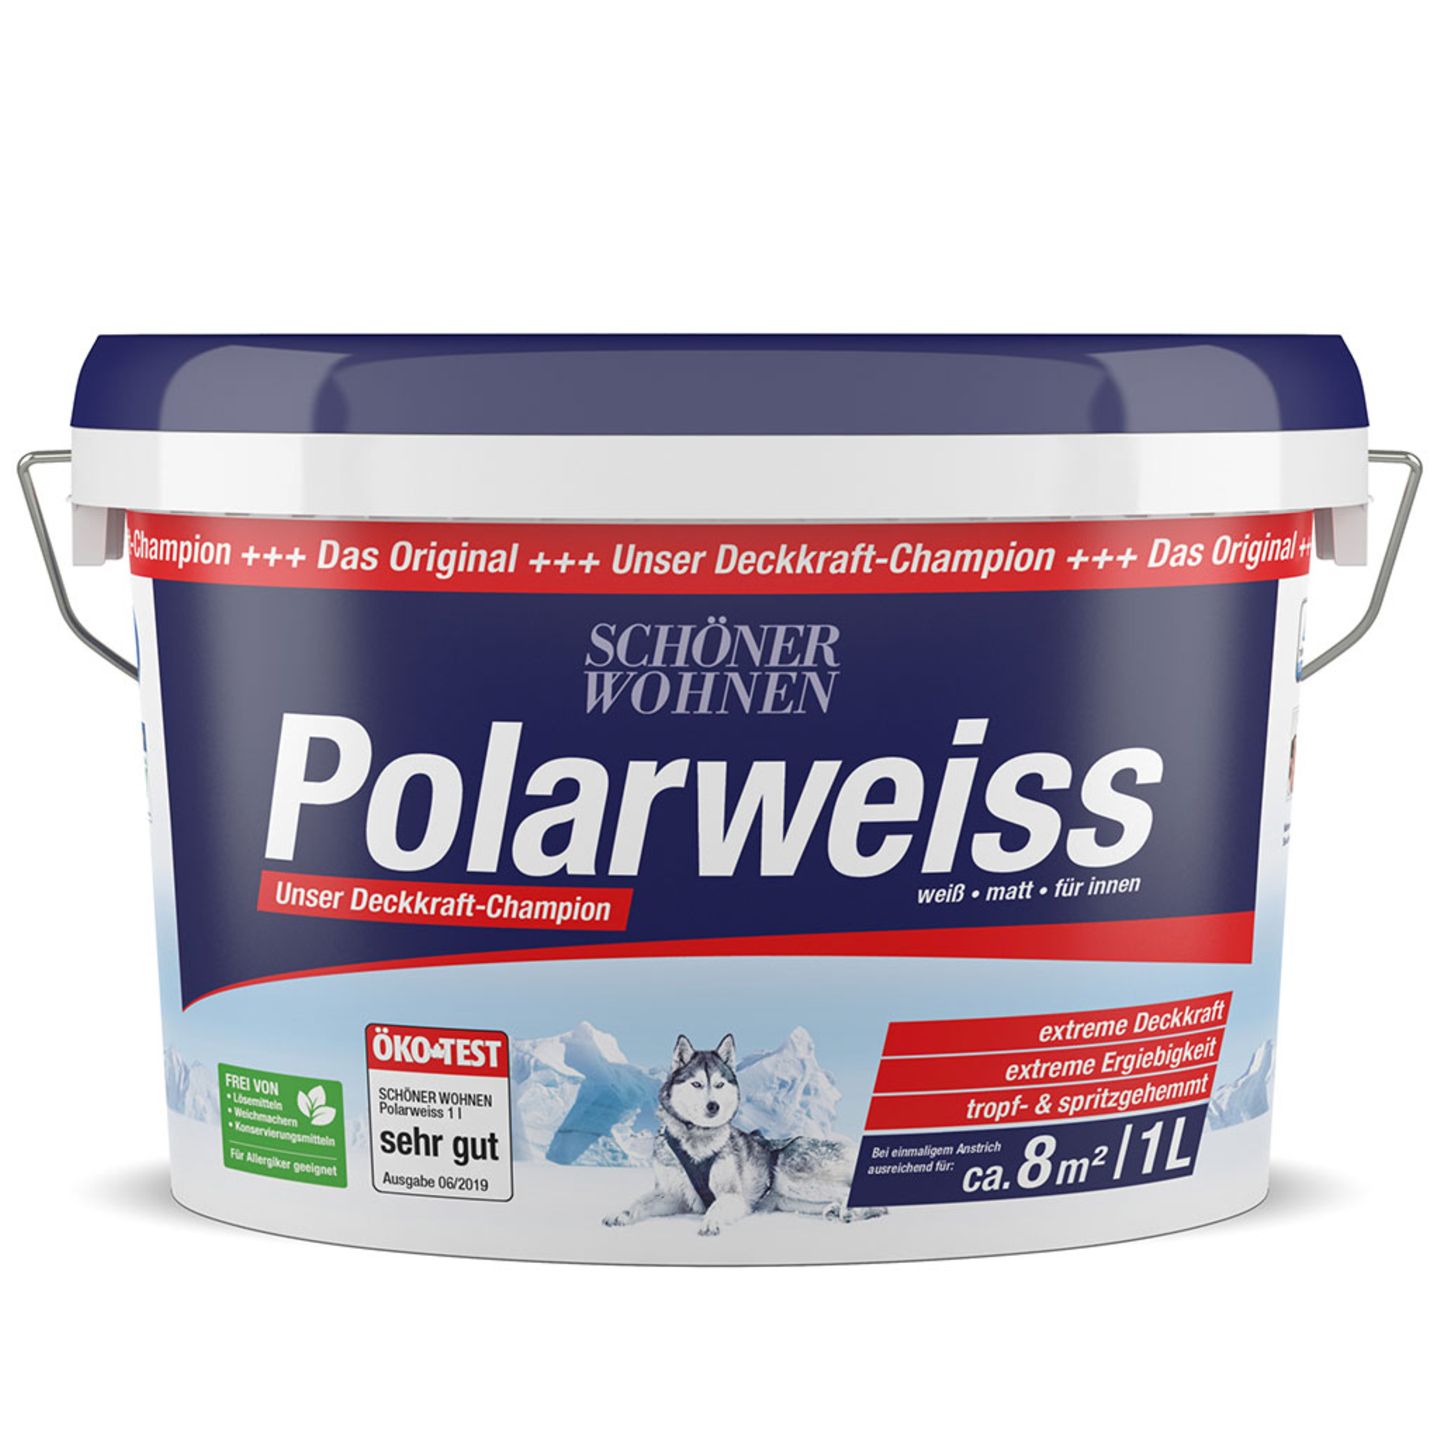 Polarweiss